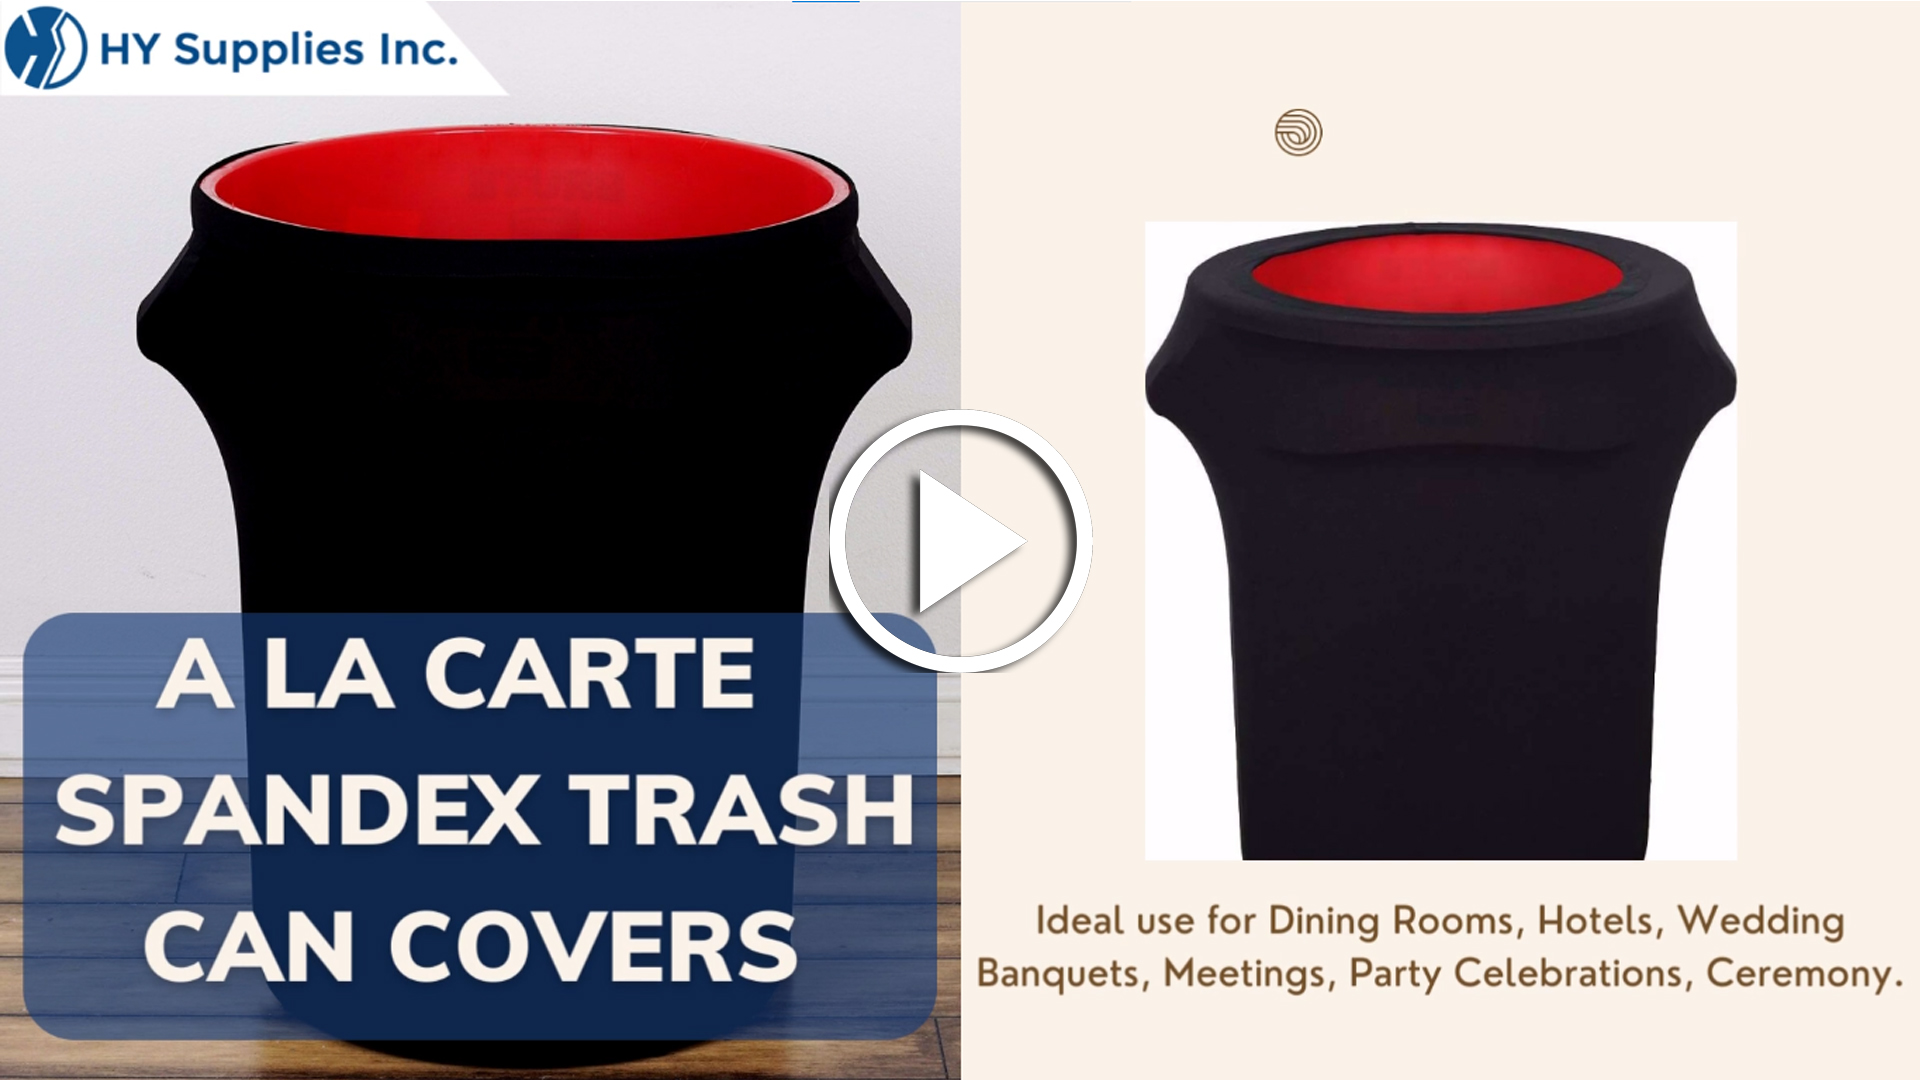 A LA CARTE - Spandex Trash Can Covers 